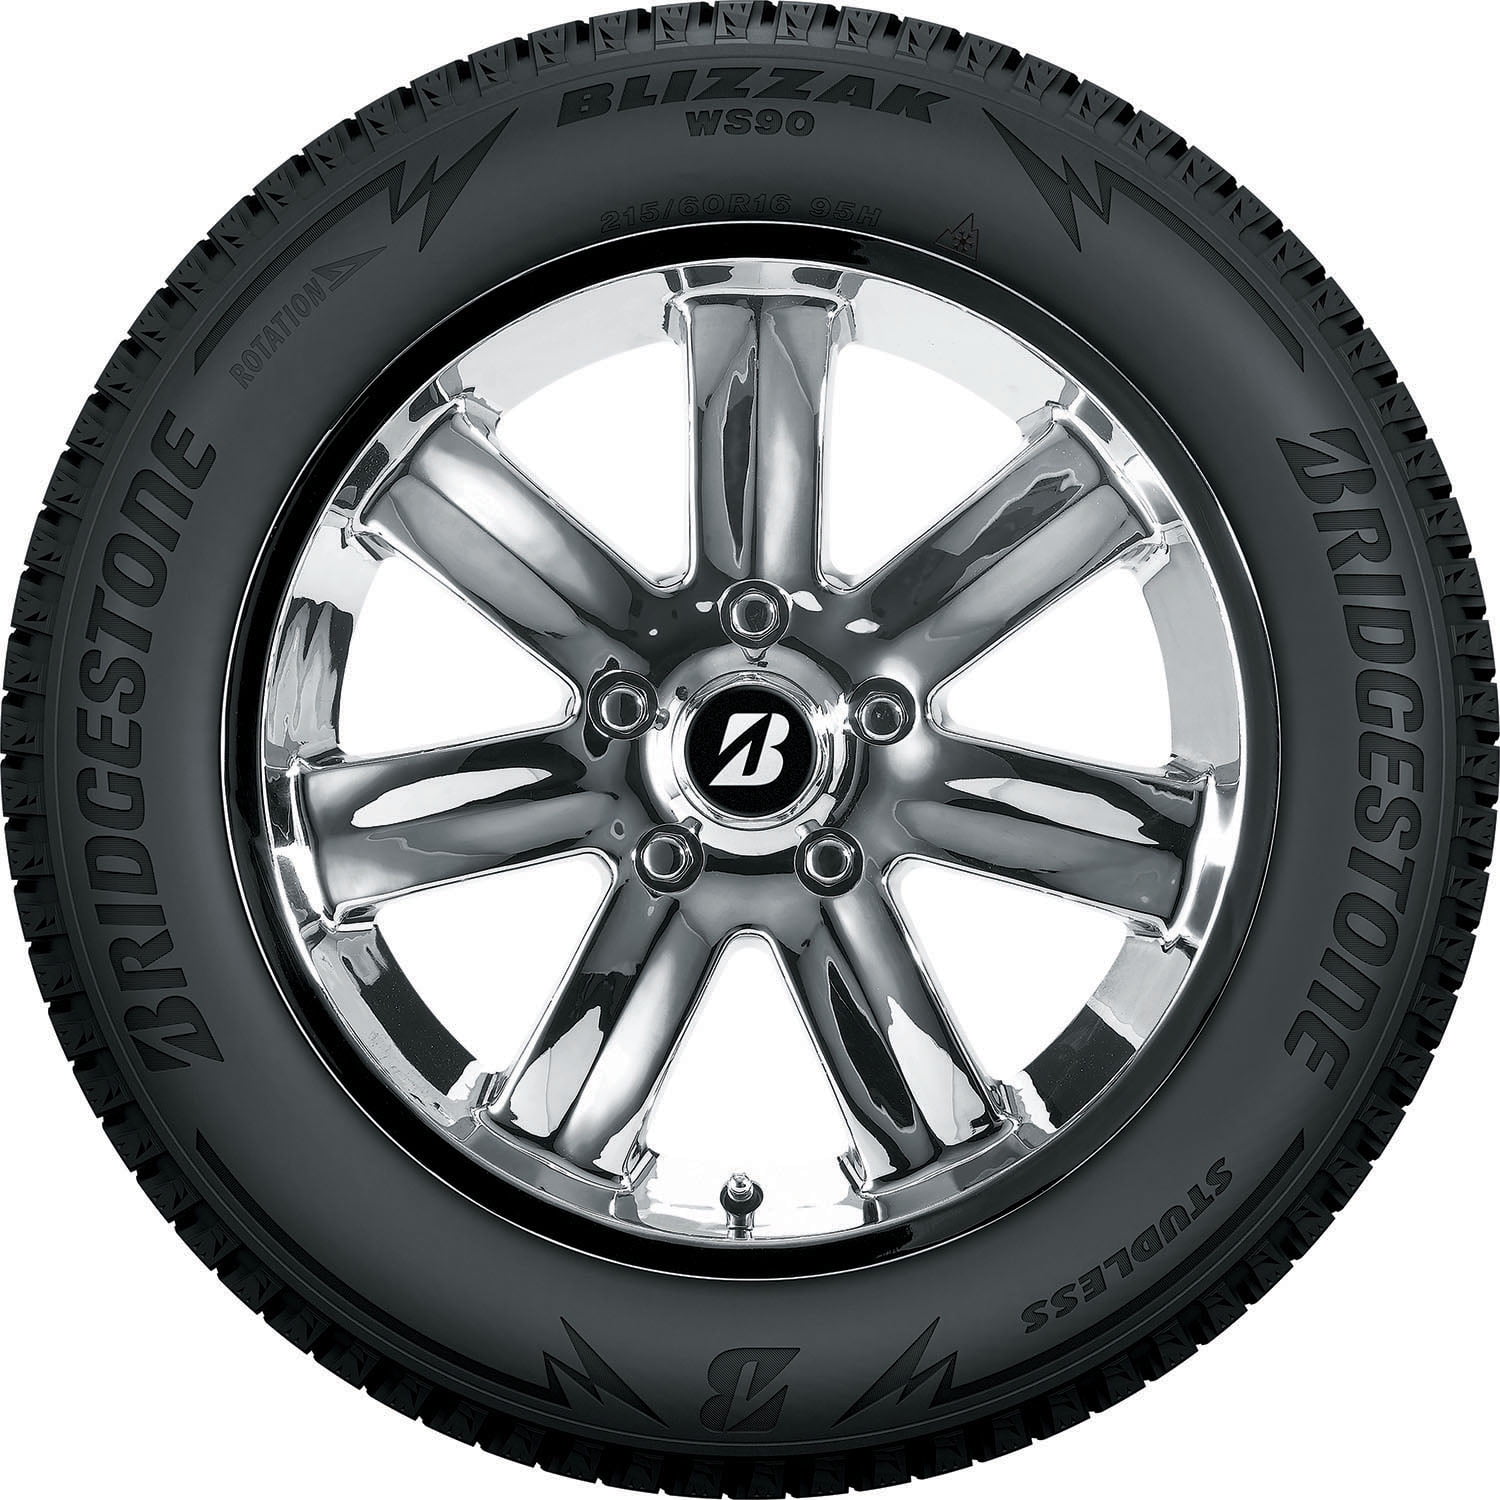 Bridgestone Blizzak WS90 Winter 175/65R15 84H Passenger Tire 